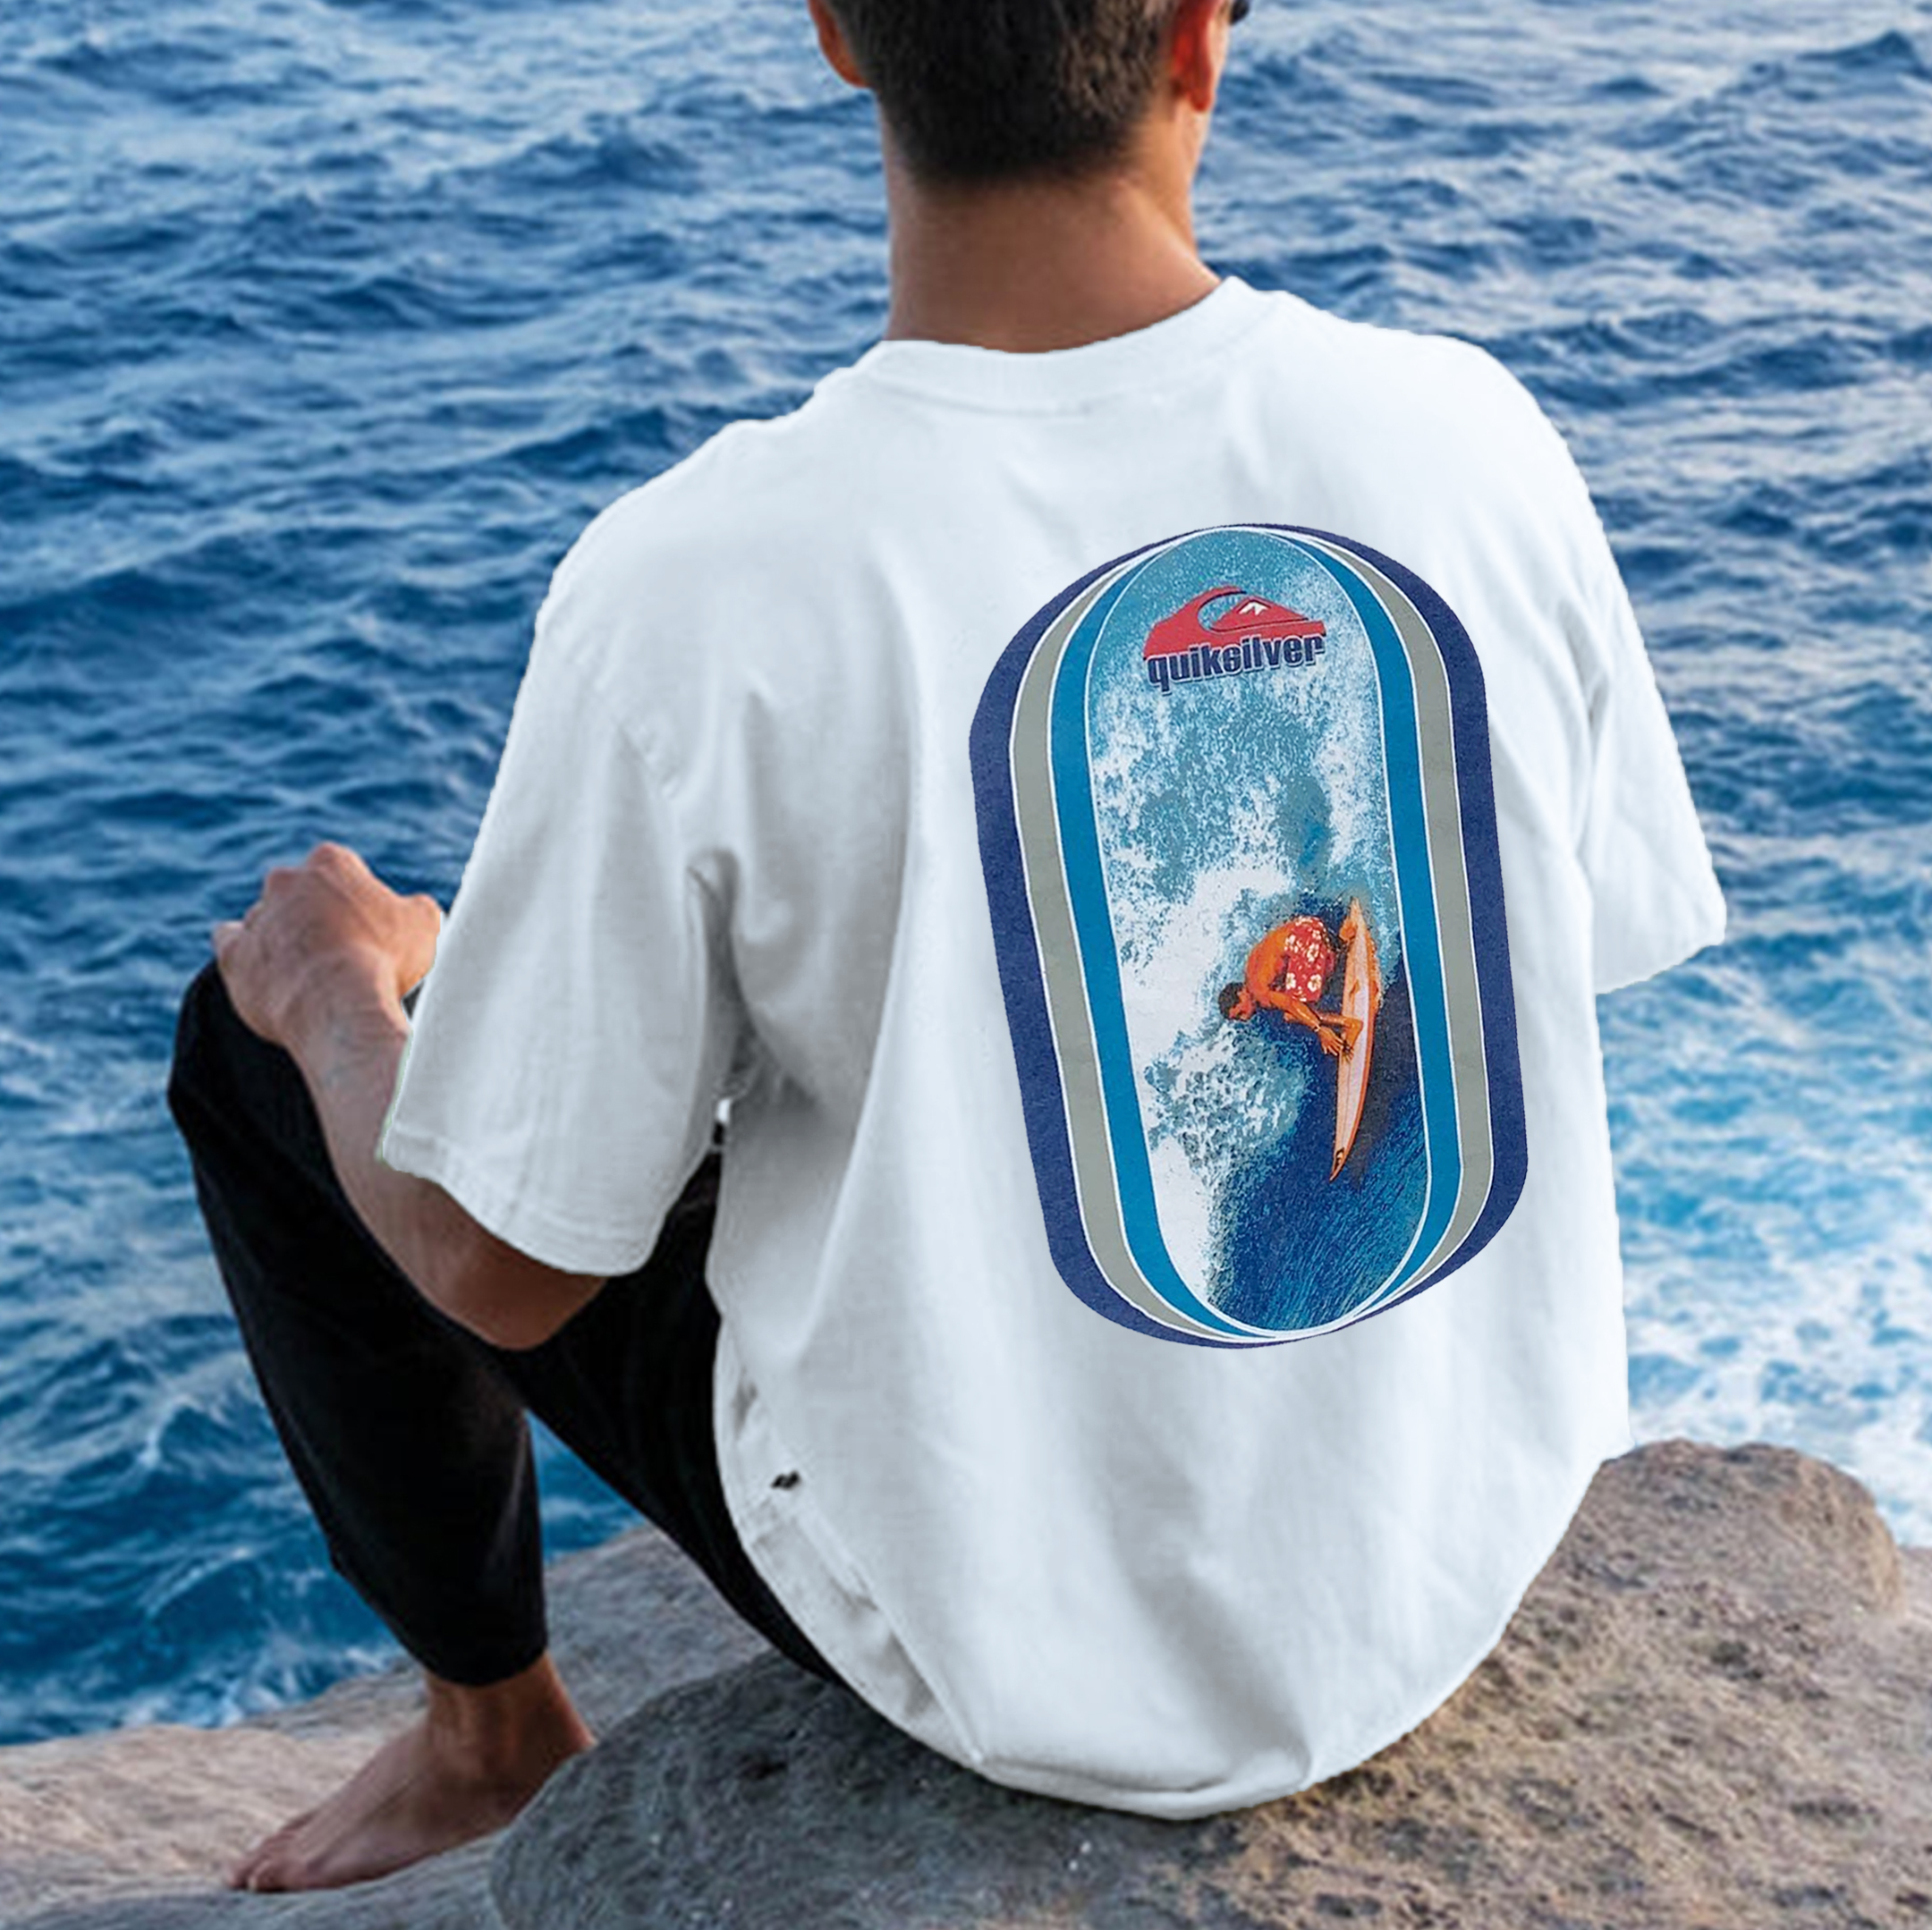 Unisex Vintage Surf Wear Printed T-shirt